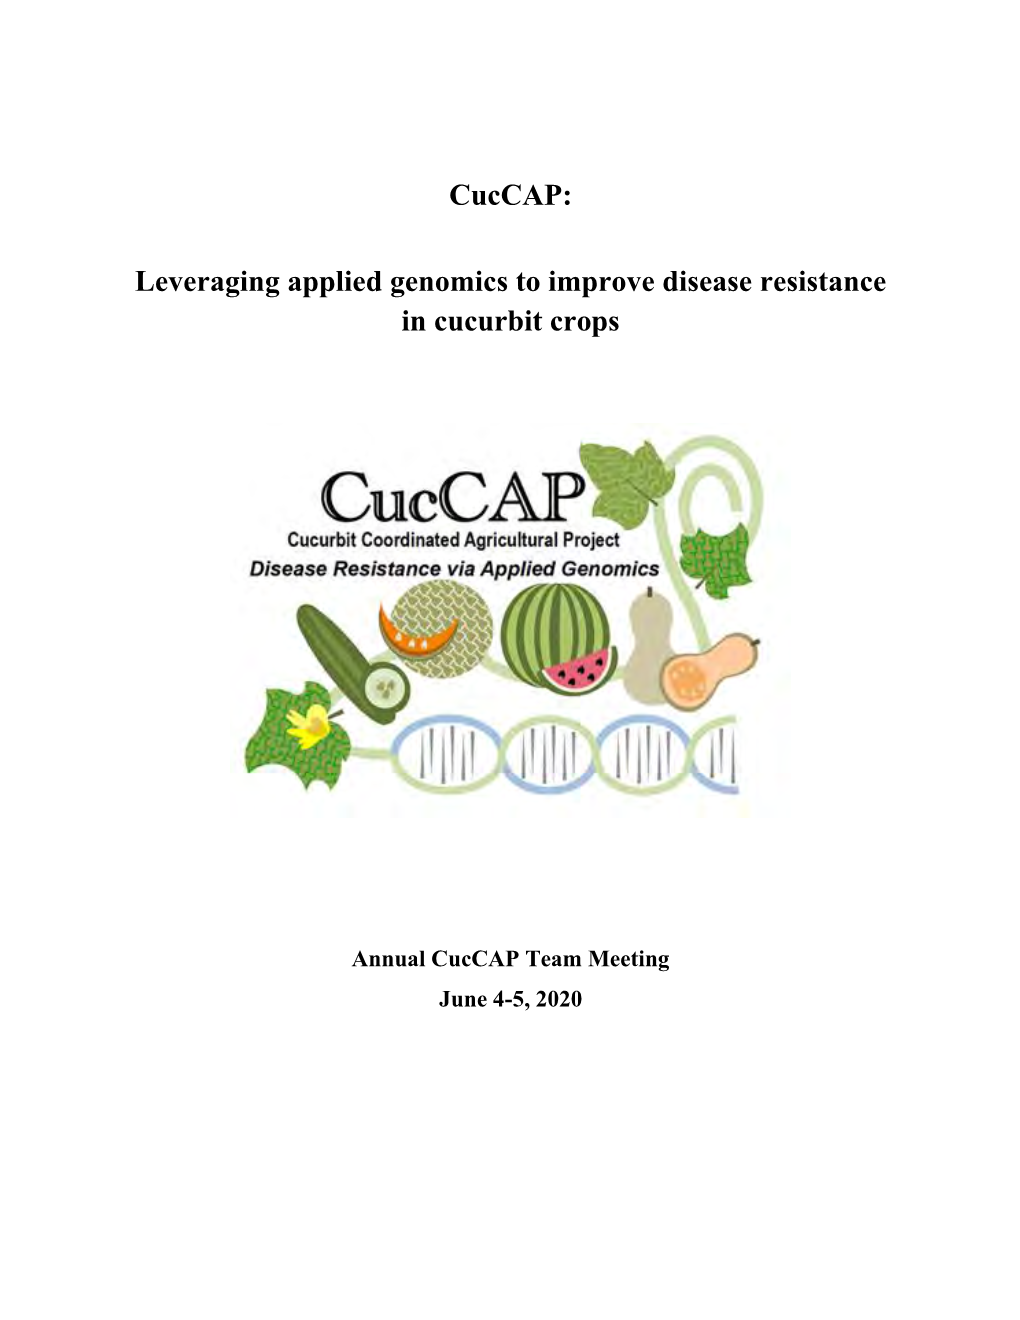 Cuccap: Leveraging Applied Genomics to Improve Disease